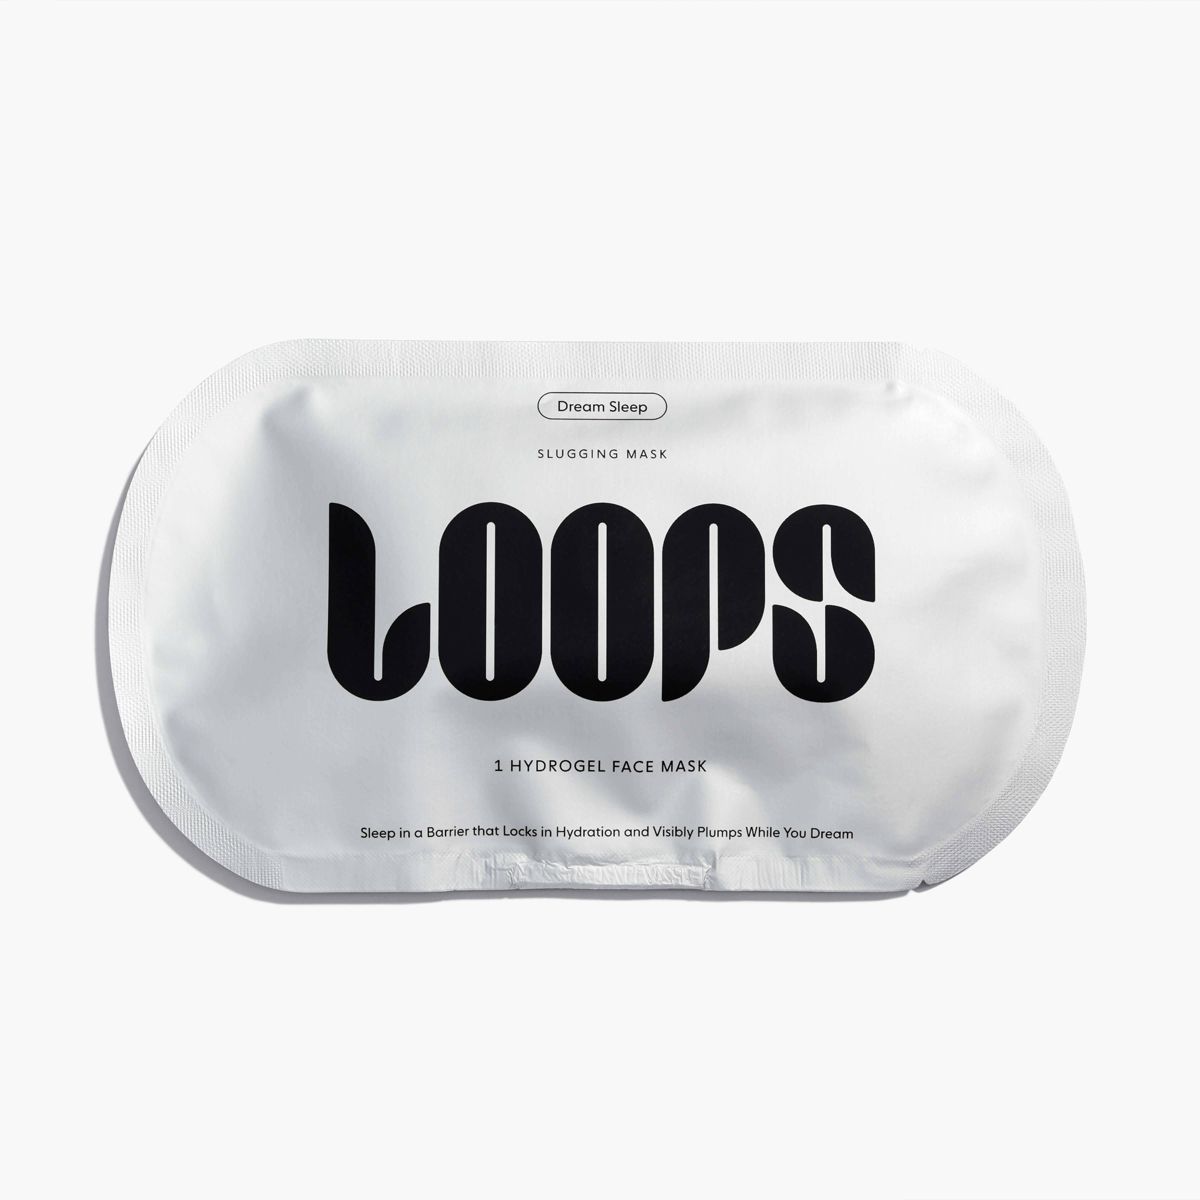 LOOPS Dream Sleep Face Mask - 1.27oz | Target